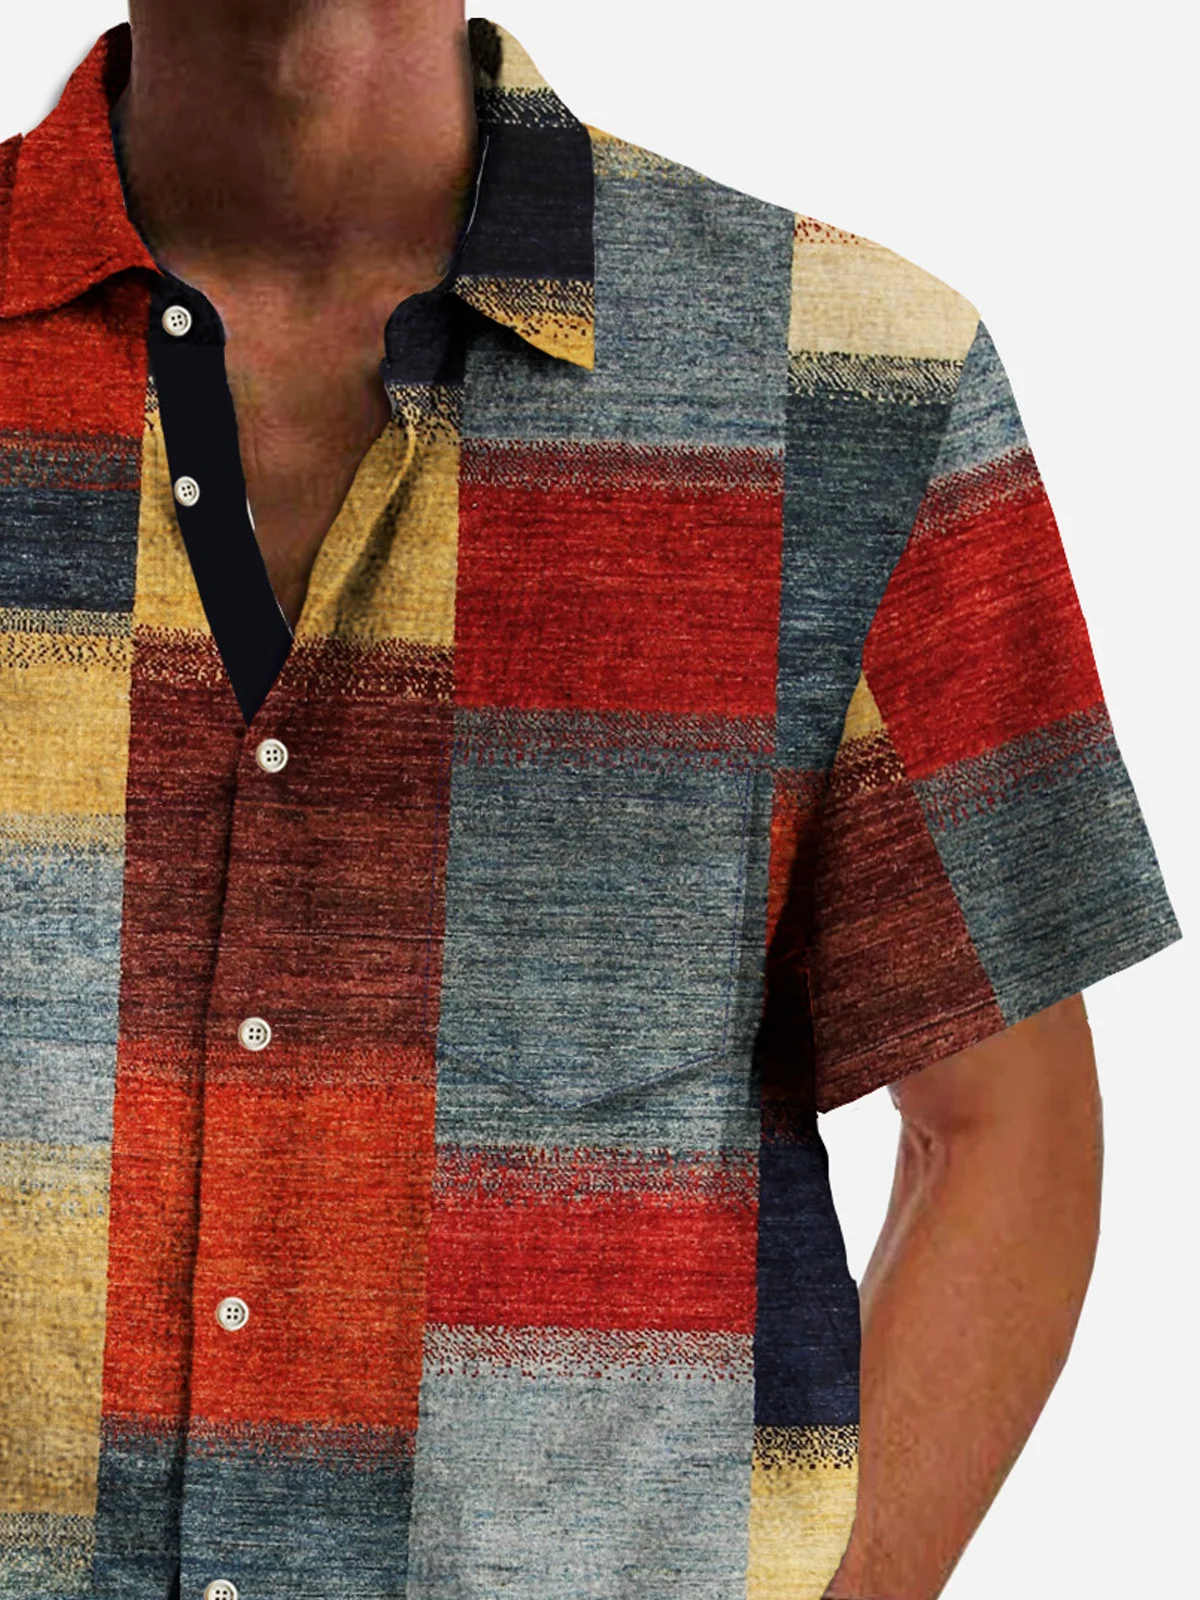 Royaura® Vintage Geometric Men's Plaid Shirt Casual Art Camp Pocket Shirt Big Tall